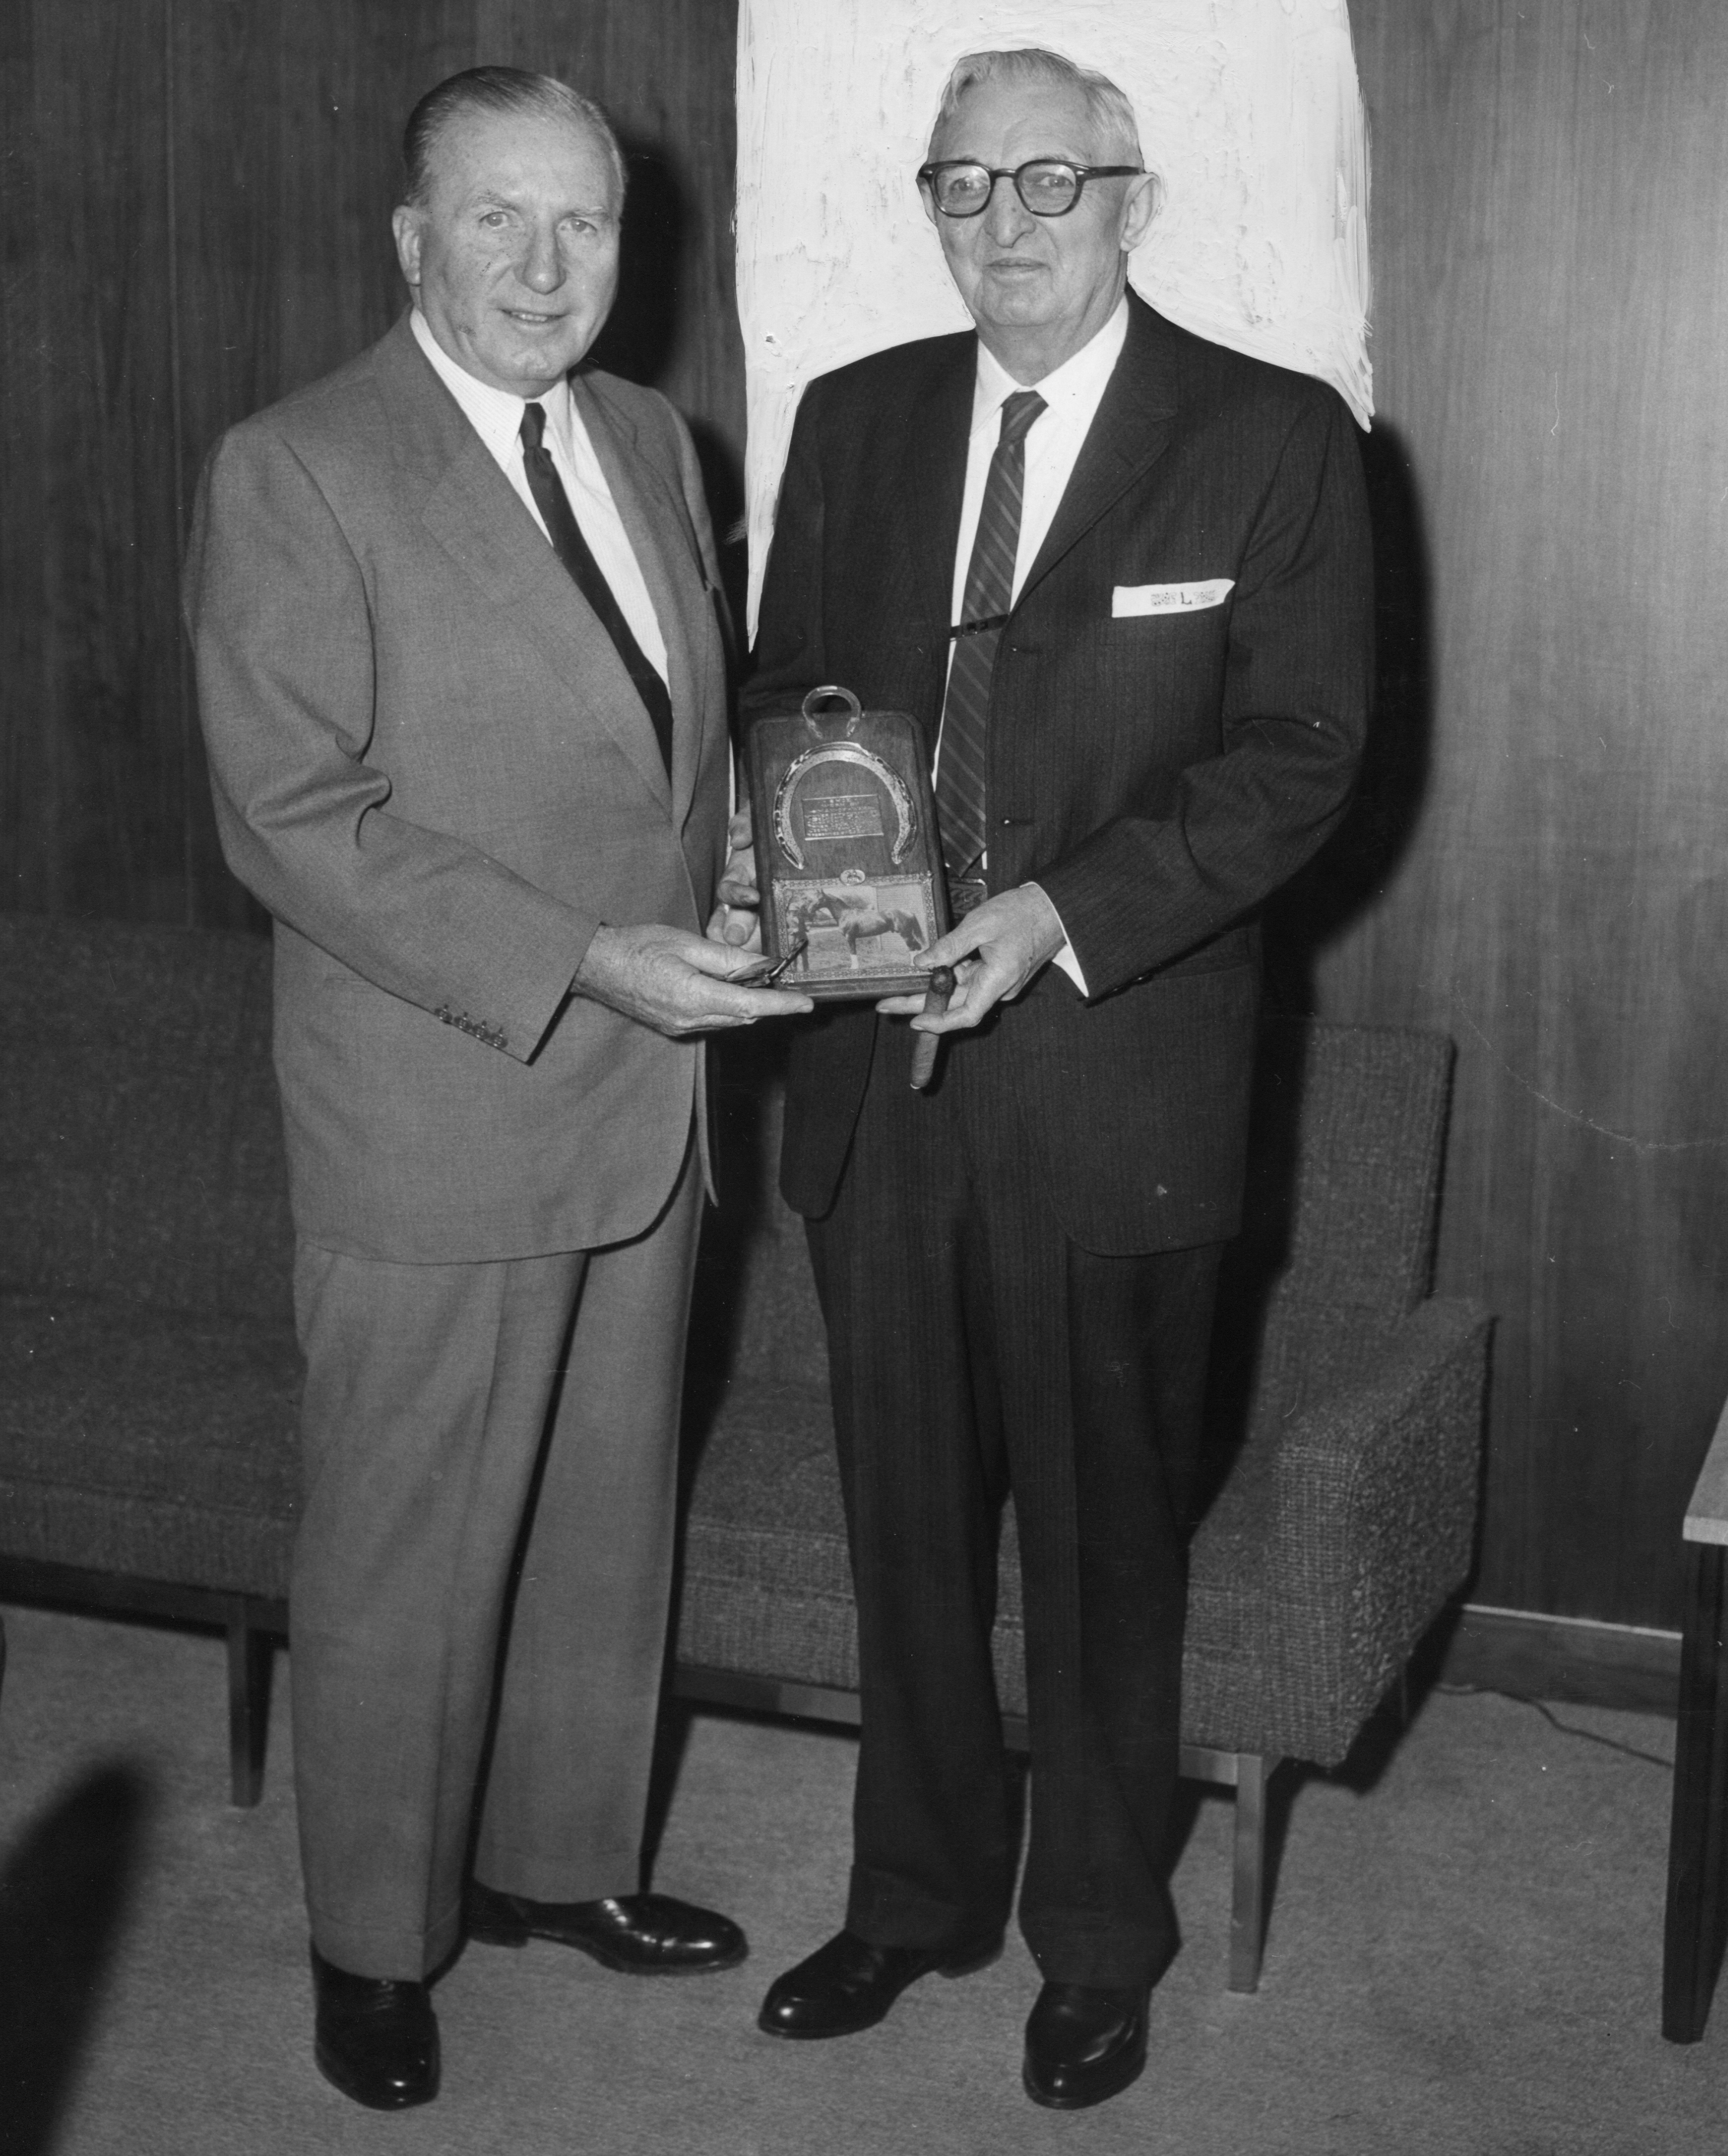 John Hanes presents Louis Feustel with an award (Bert and Richard Morgan/Museum Collection)